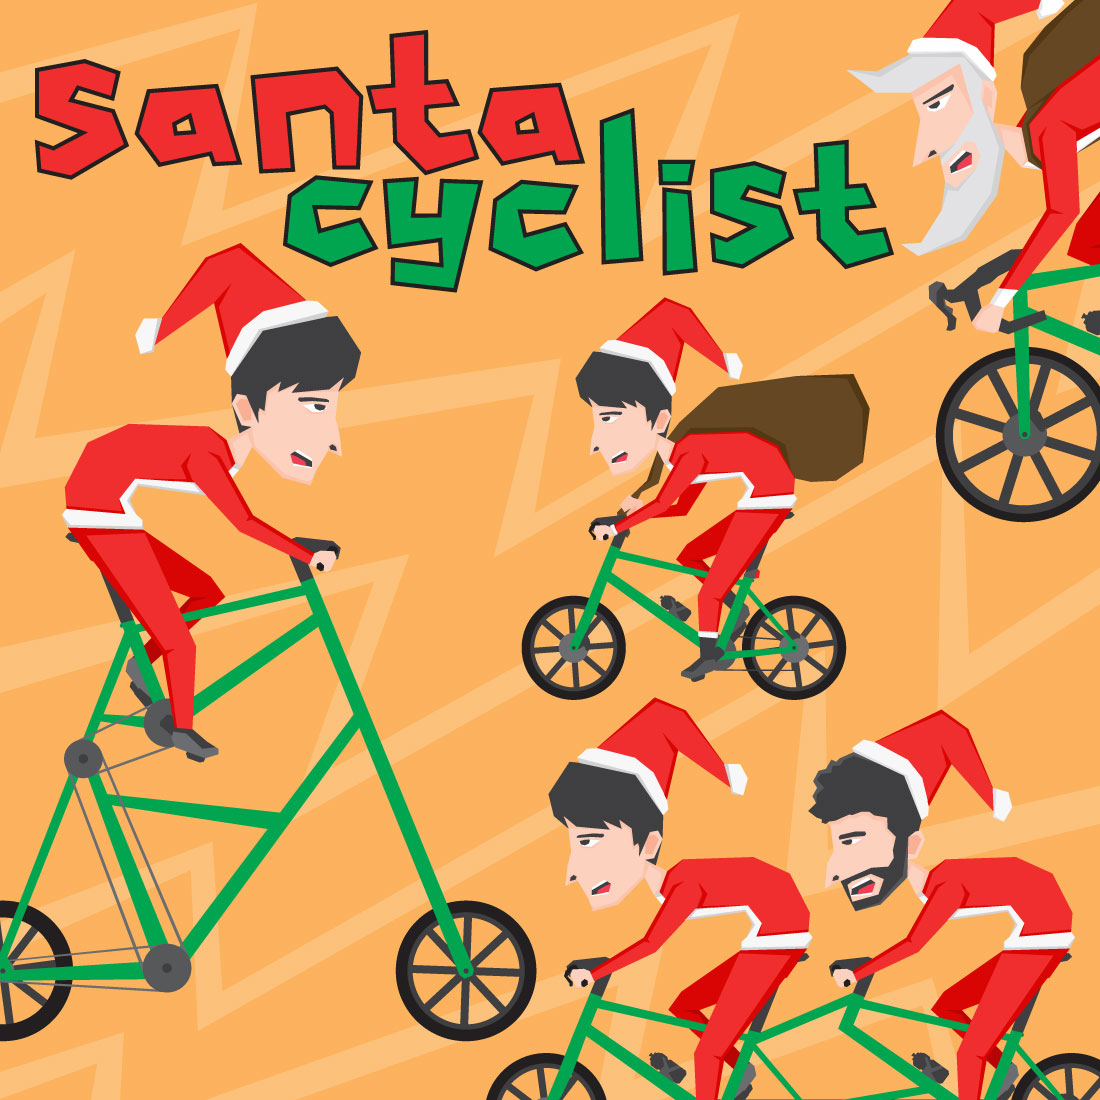 Cute Santa Claus Riding Bike cover image.